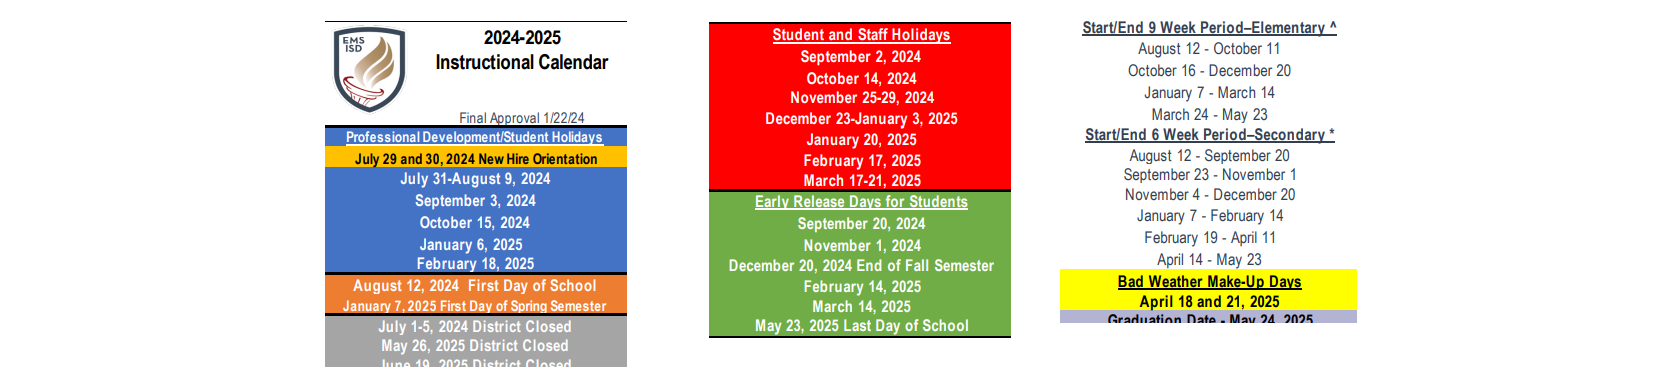 District School Academic Calendar Key for Wayside Middle